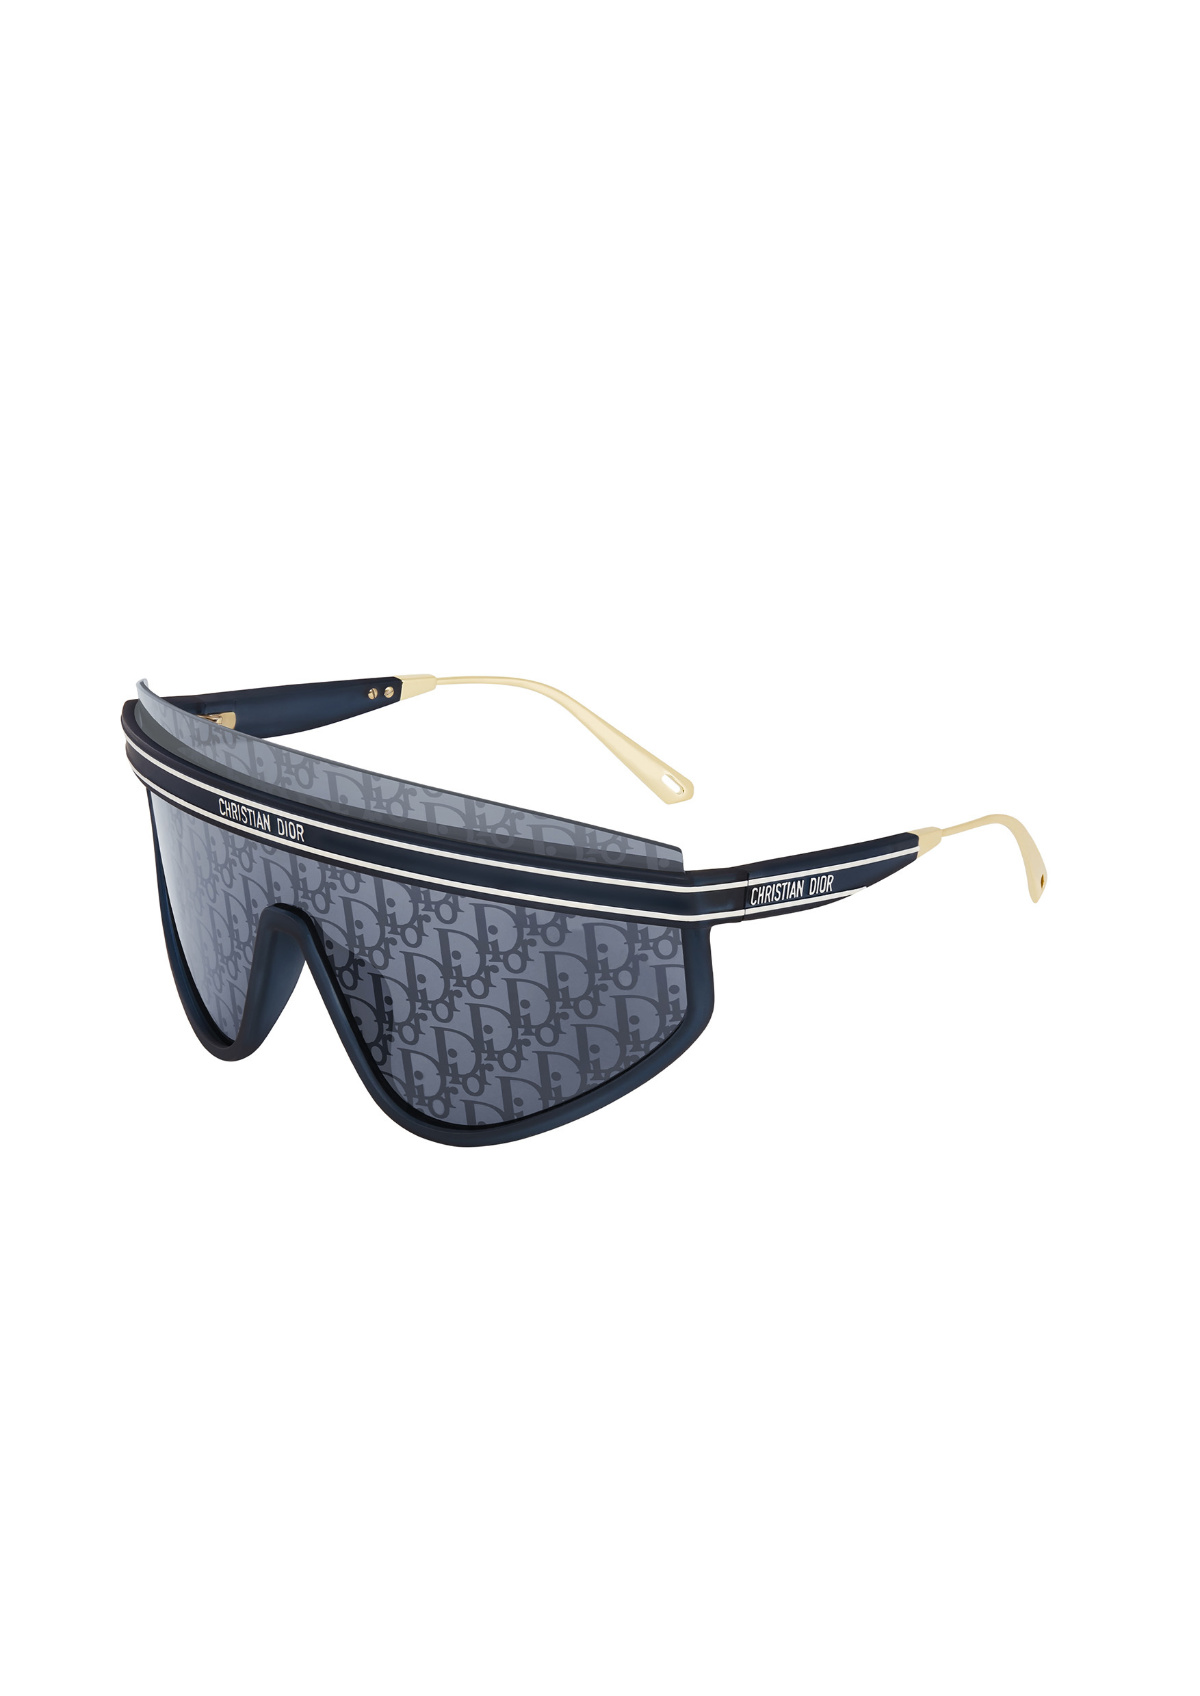 Dior SoStellaire1 - Priyanka Chopra Jonas - Citadel | Sunglasses ID -  celebrity sunglasses